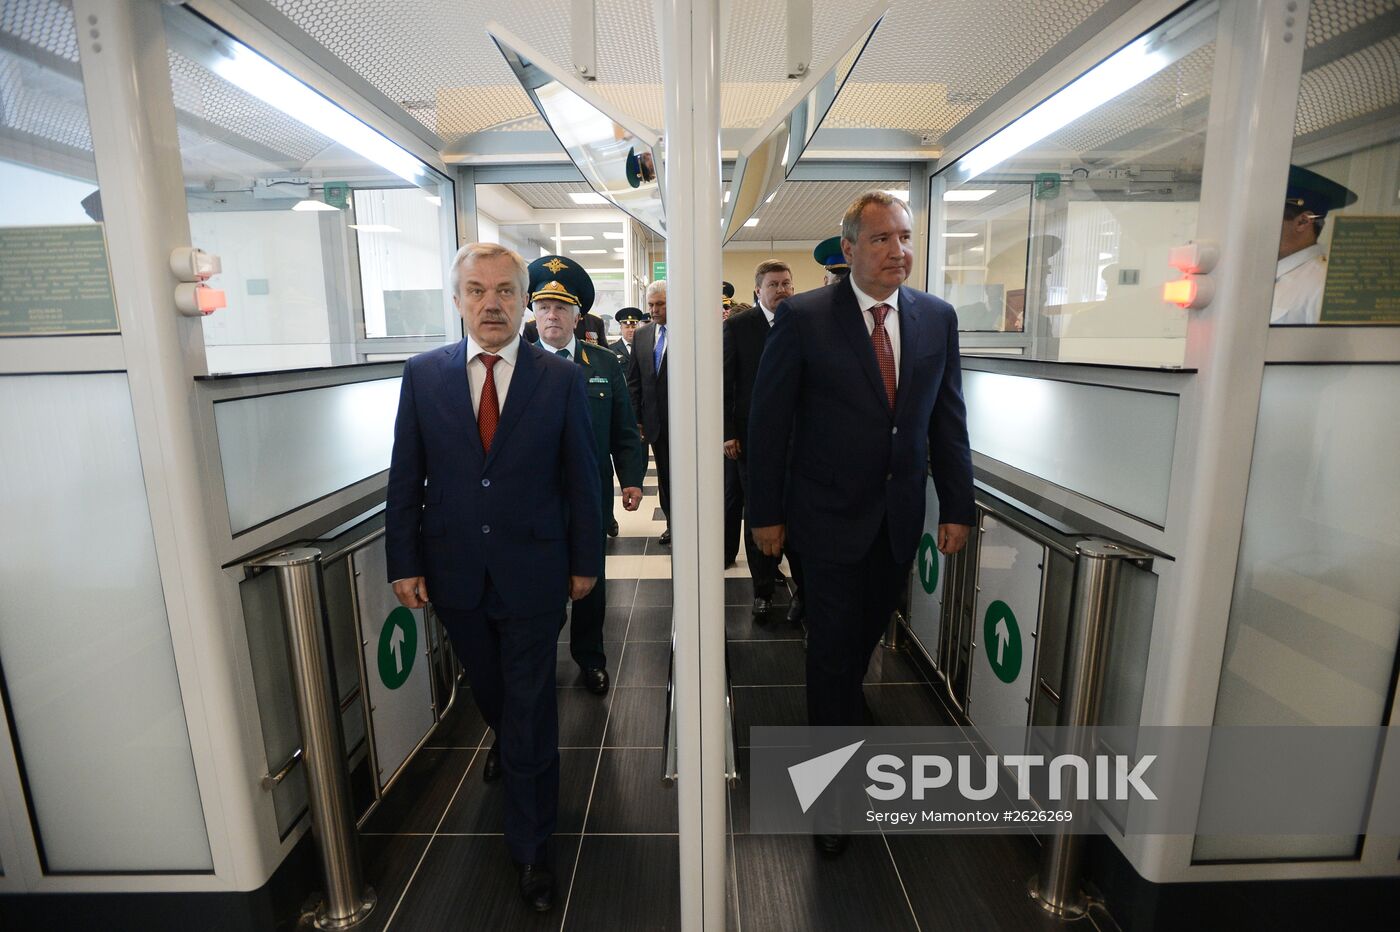 Deputy Prime Minister Rogozin visits Belgorod Region